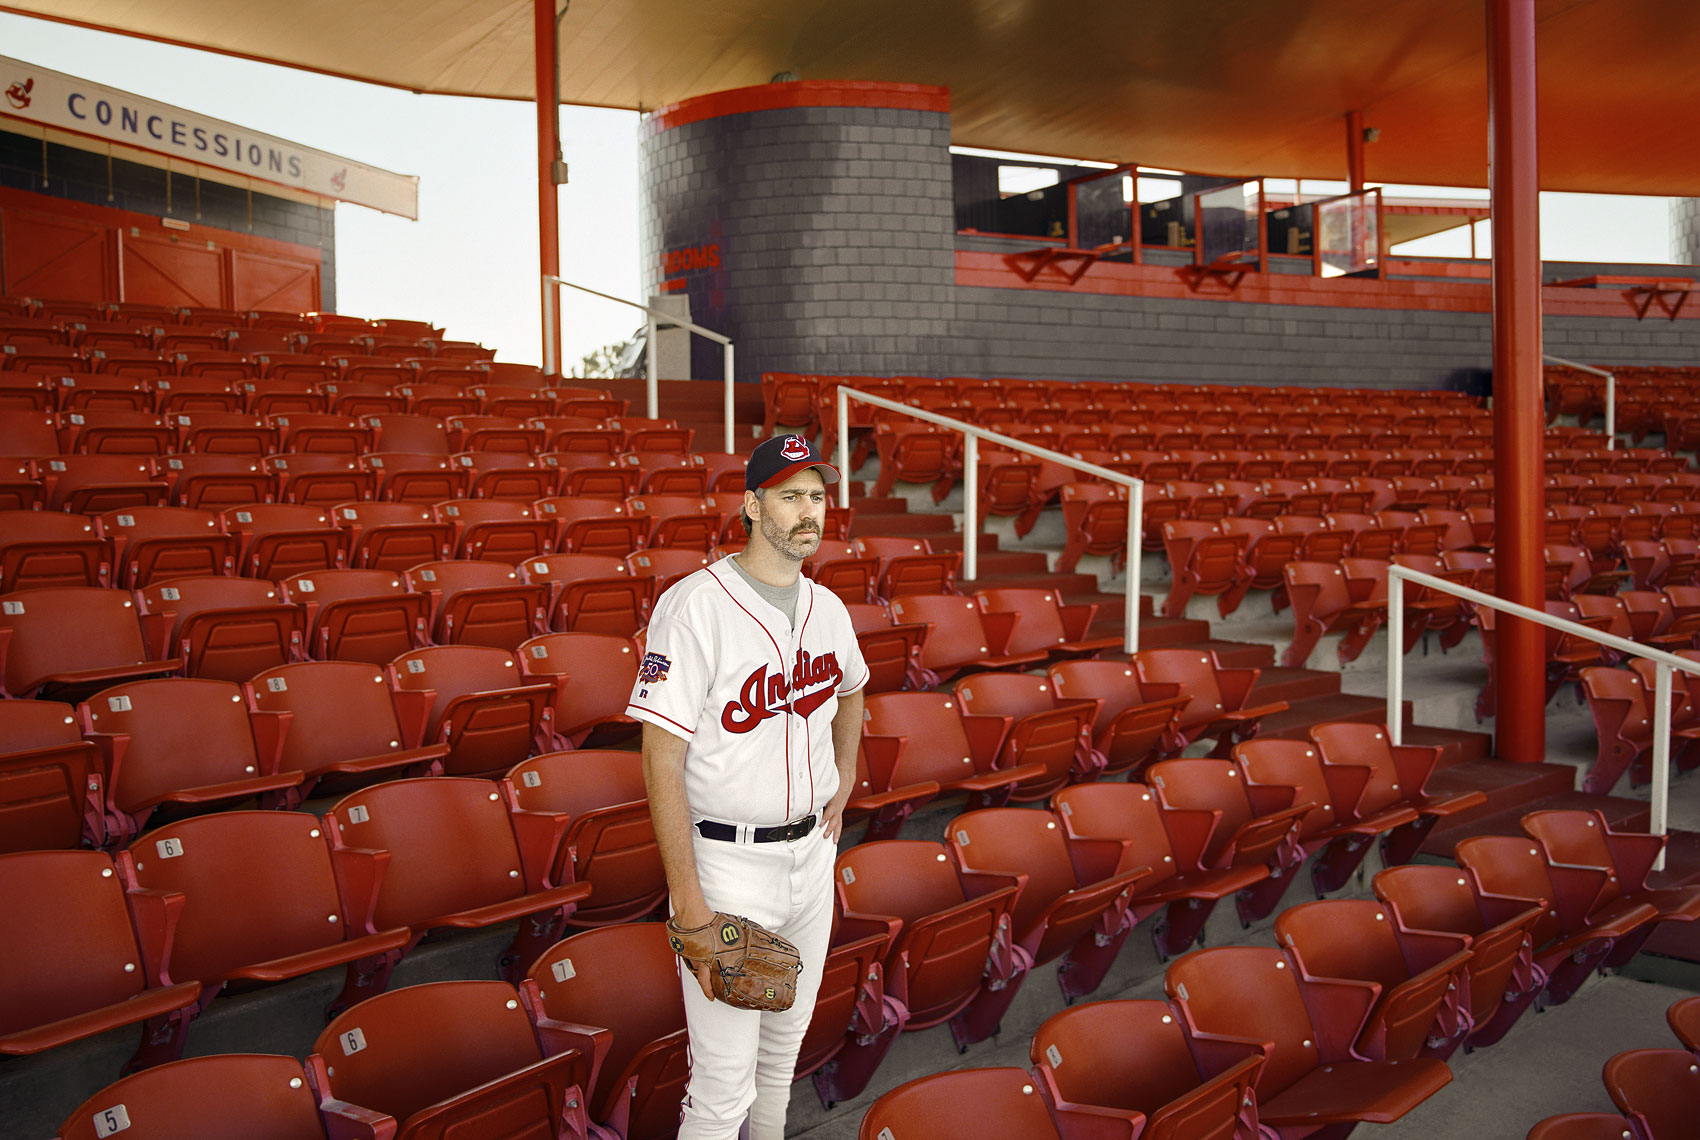 Location portrait of MLB pitcher Paul Assenmacher